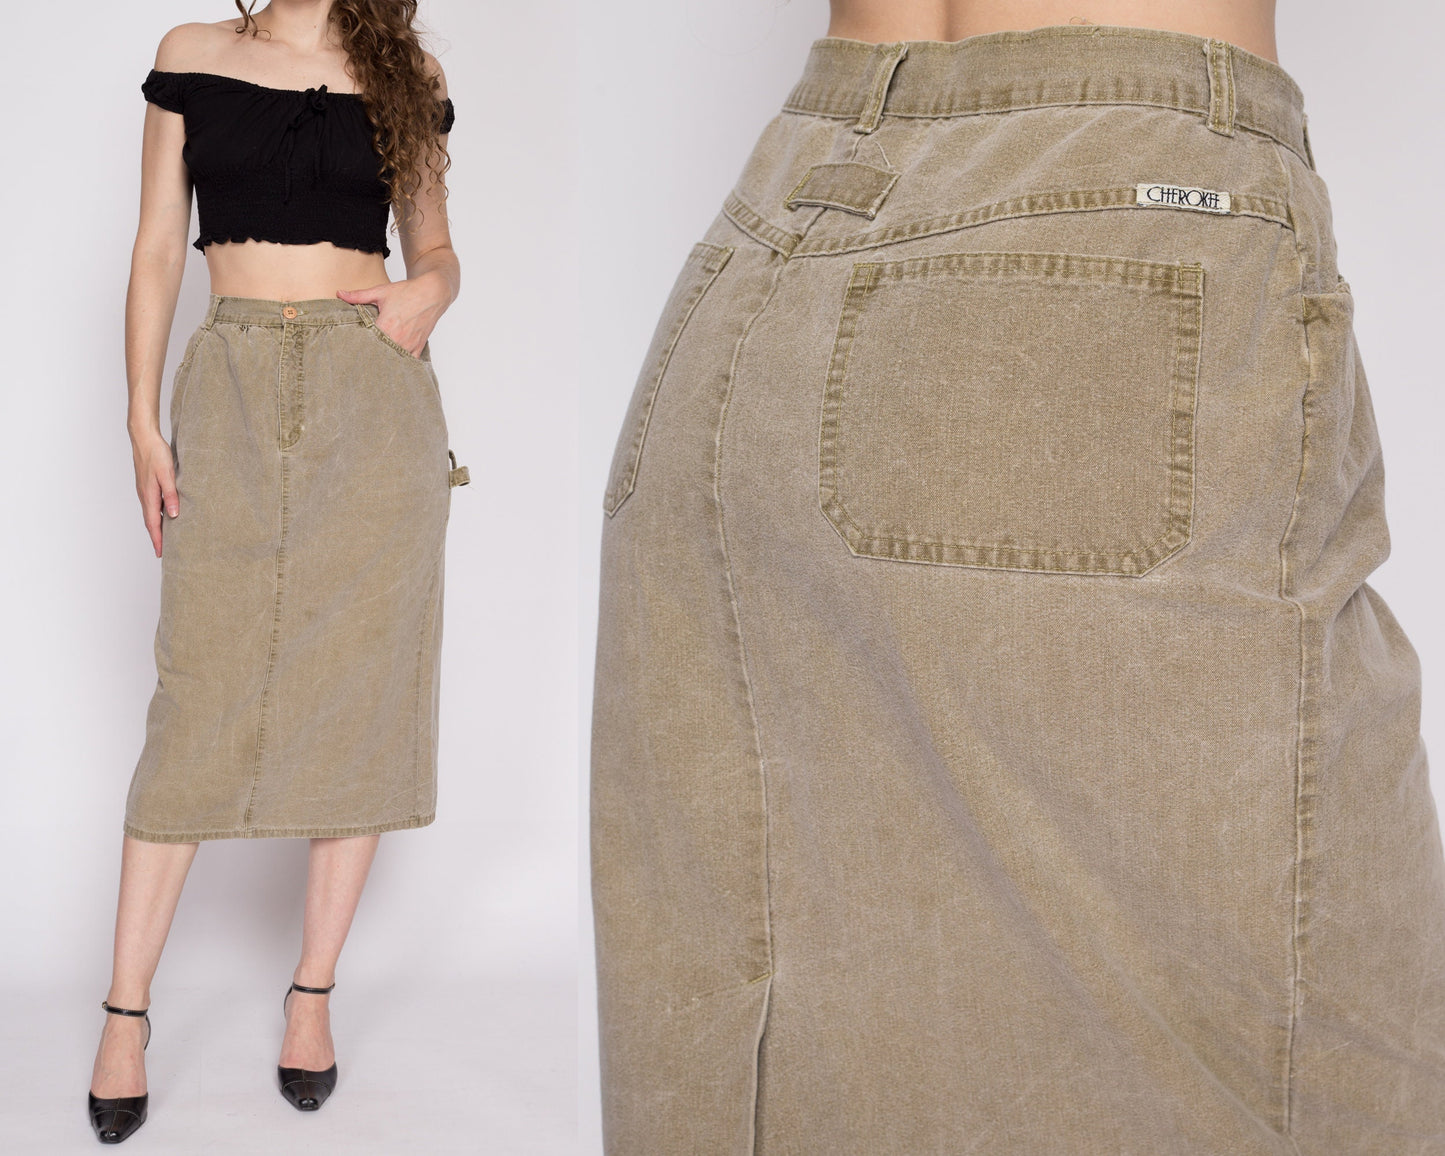 M| 90s Olive Khaki Midi Carpenter Skirt - Medium, 28" | Vintage High Waisted A Line Cotton Cargo Skirt